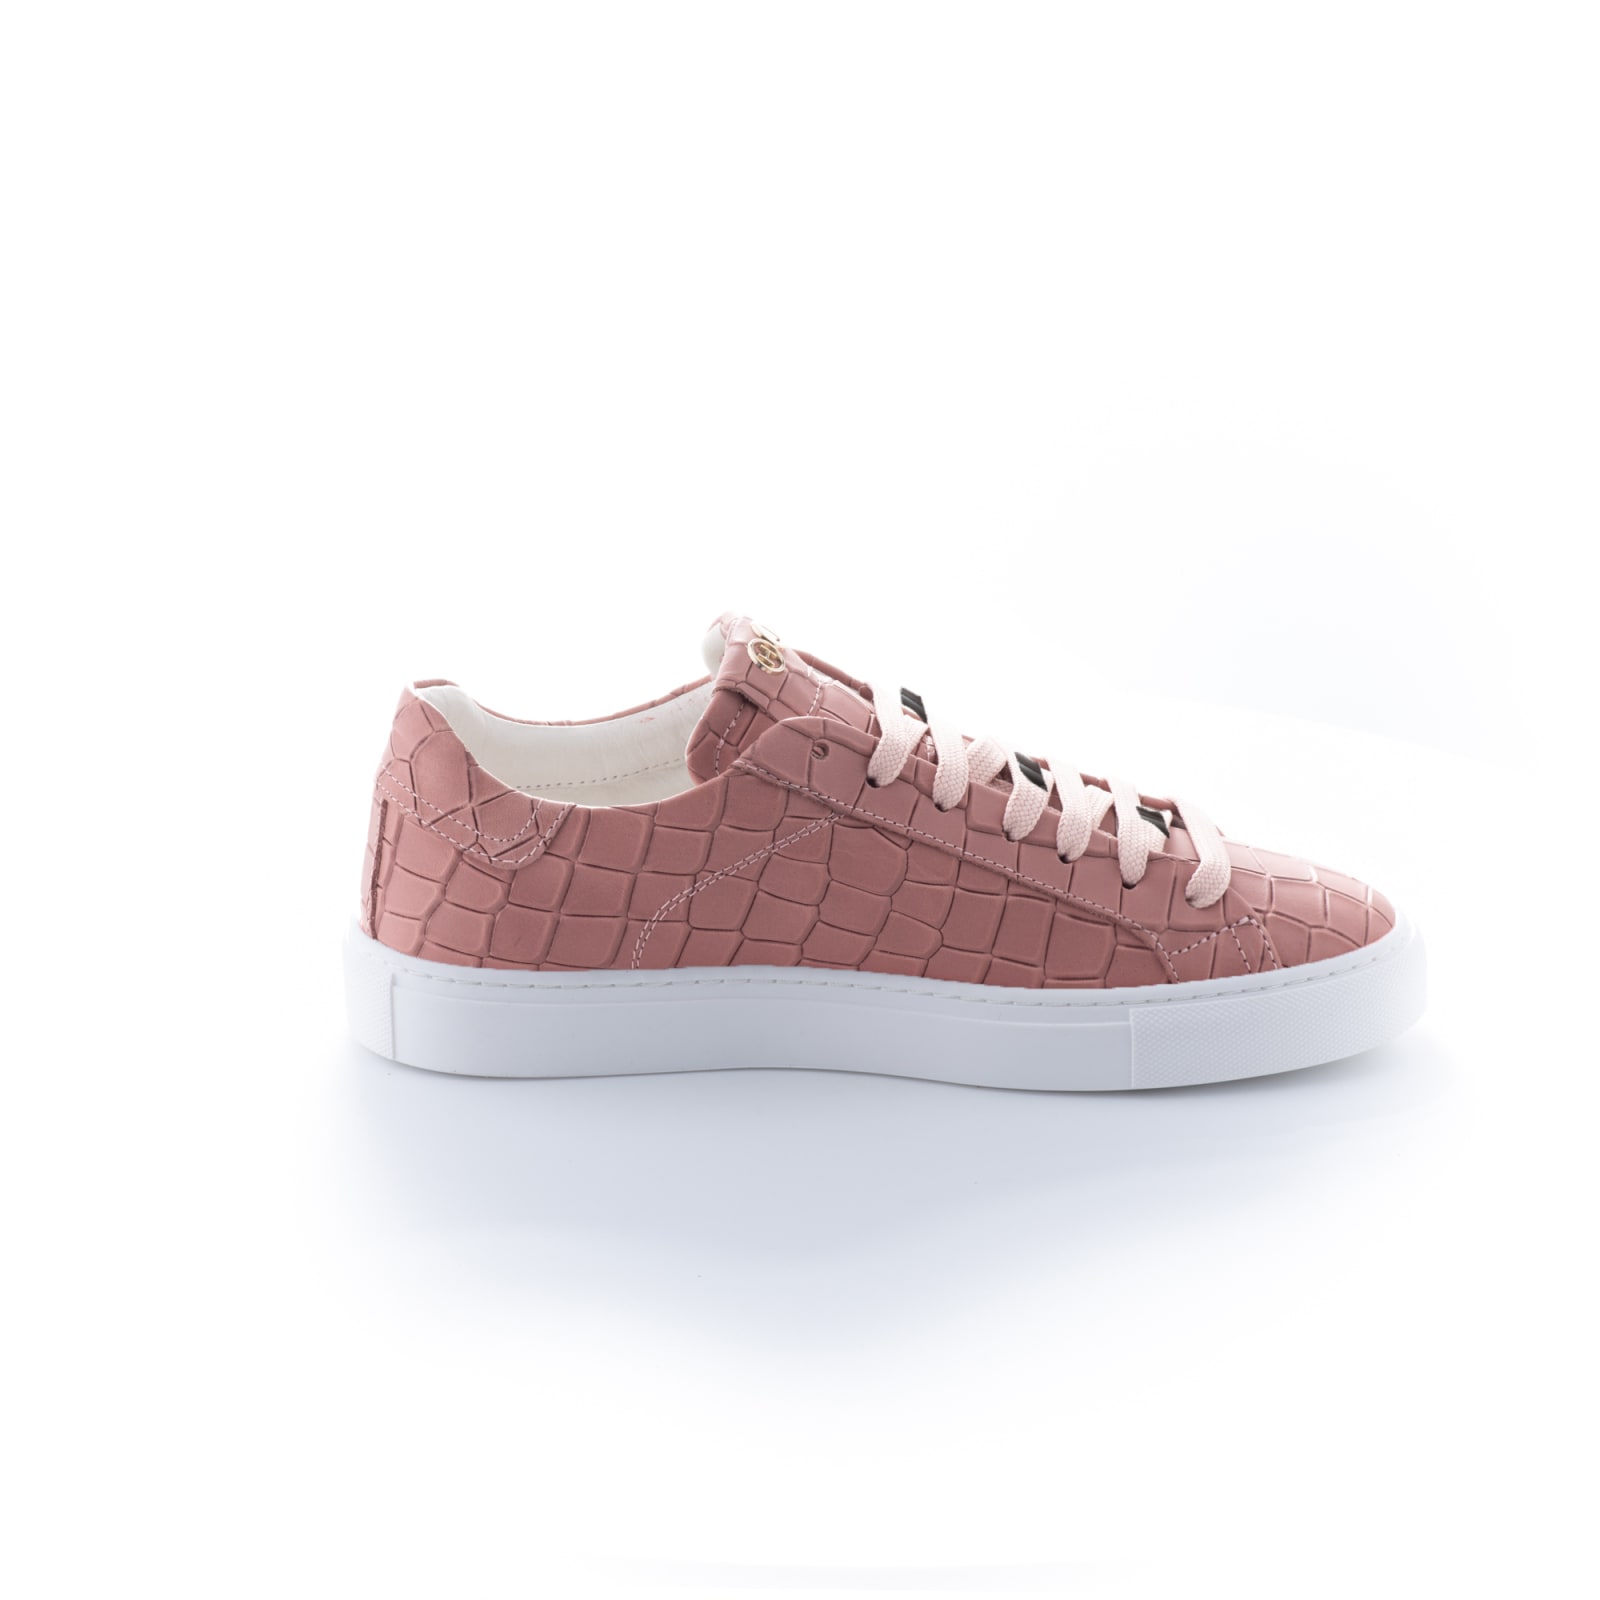 Hide & Jack Essence Pink White Sneakers